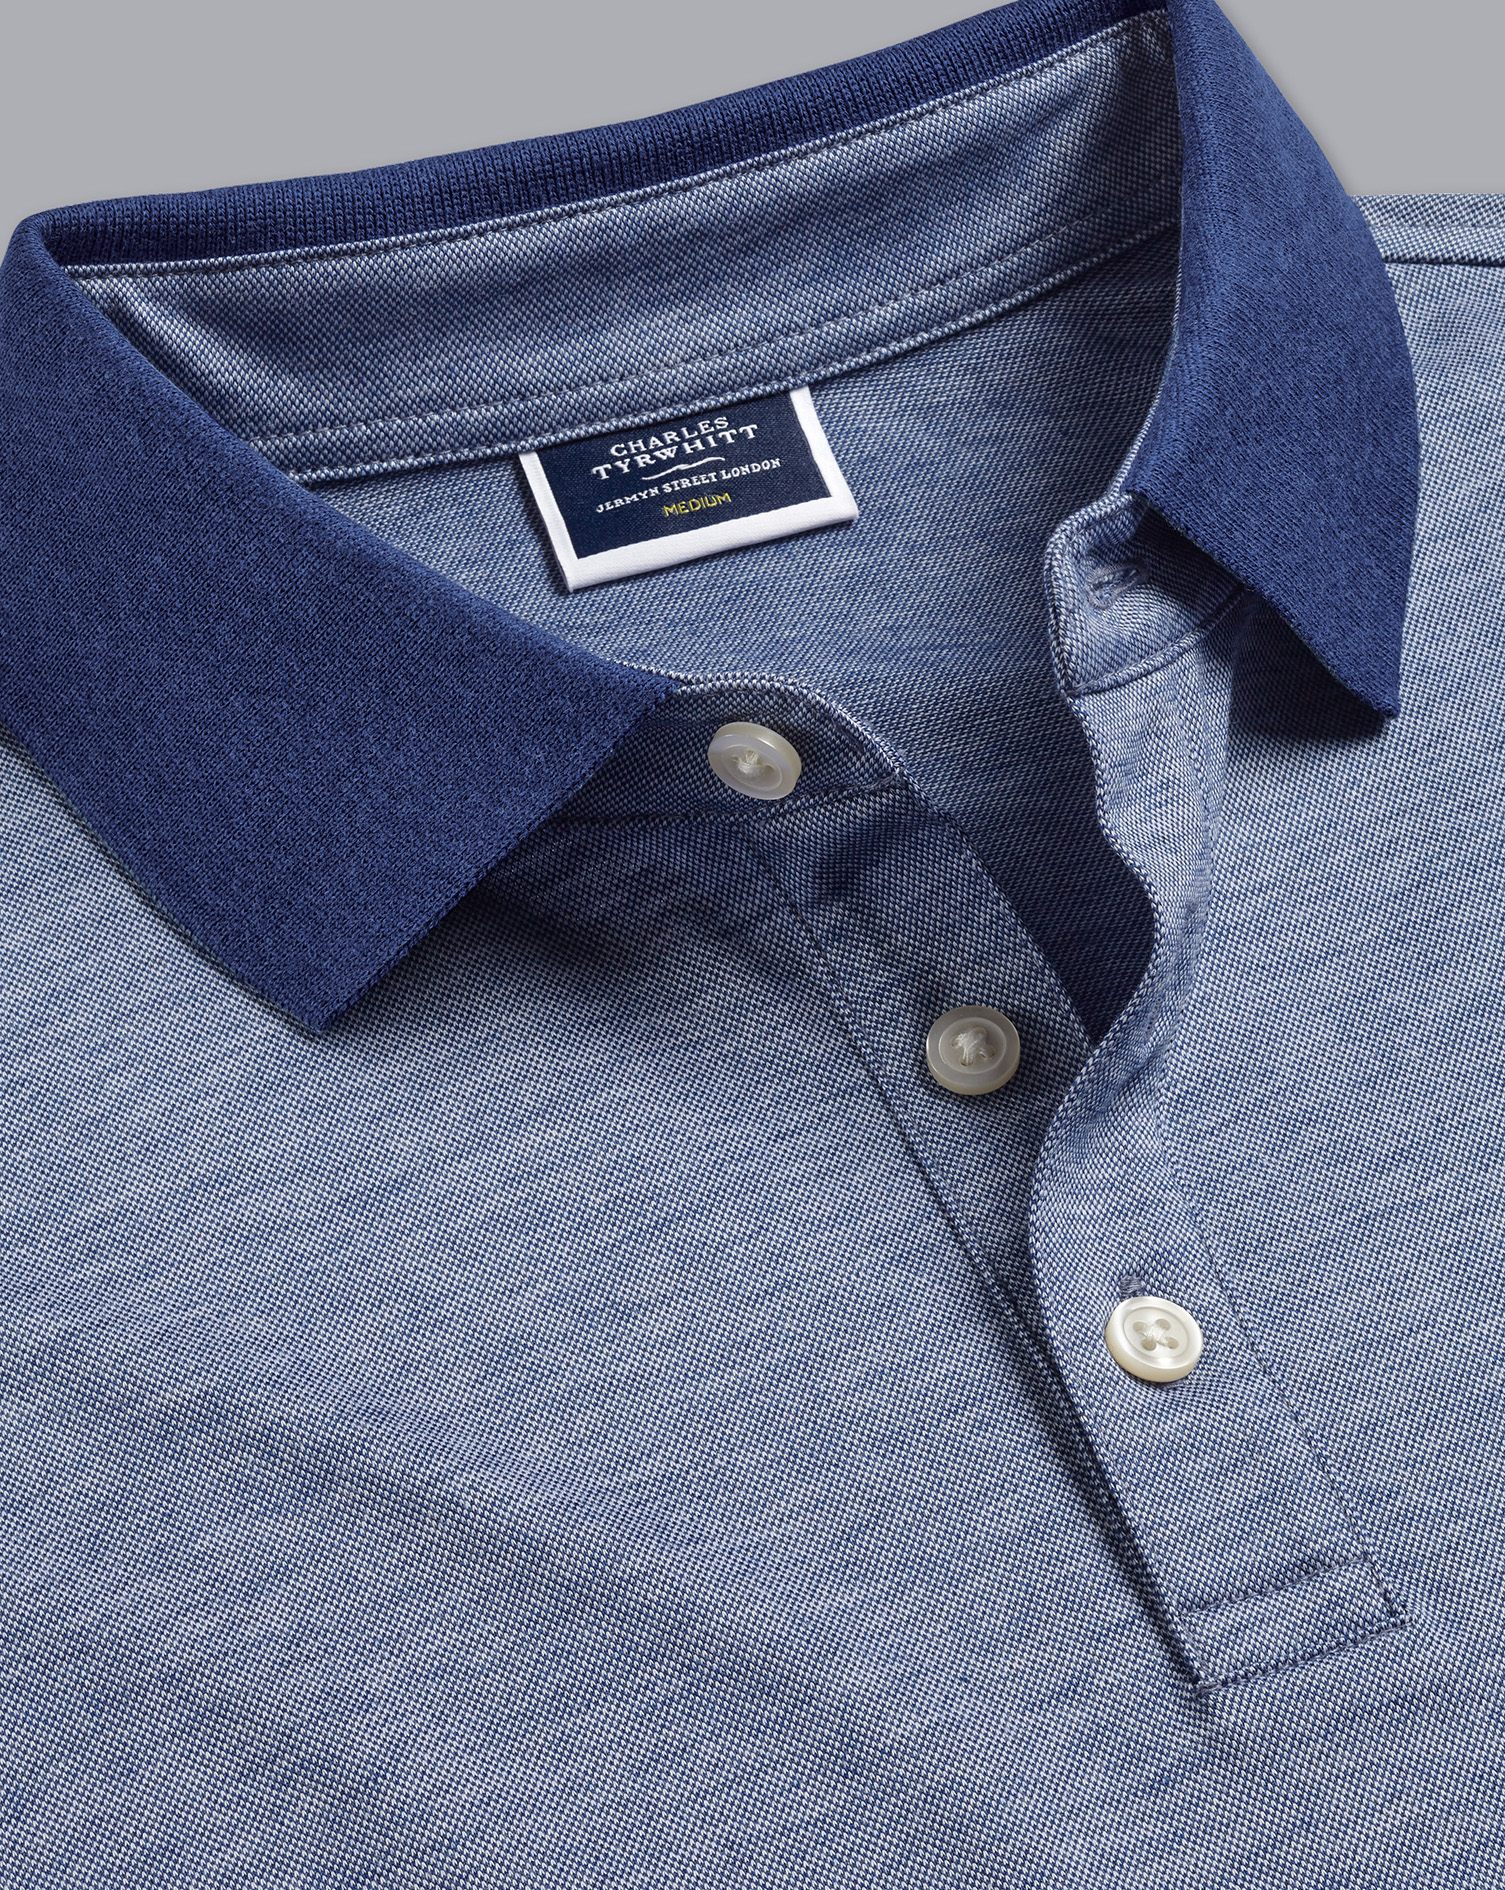 Men's Charles Tyrwhitt Birdseye Pique Polo Shirt - Royal Blue Size XS Cotton
